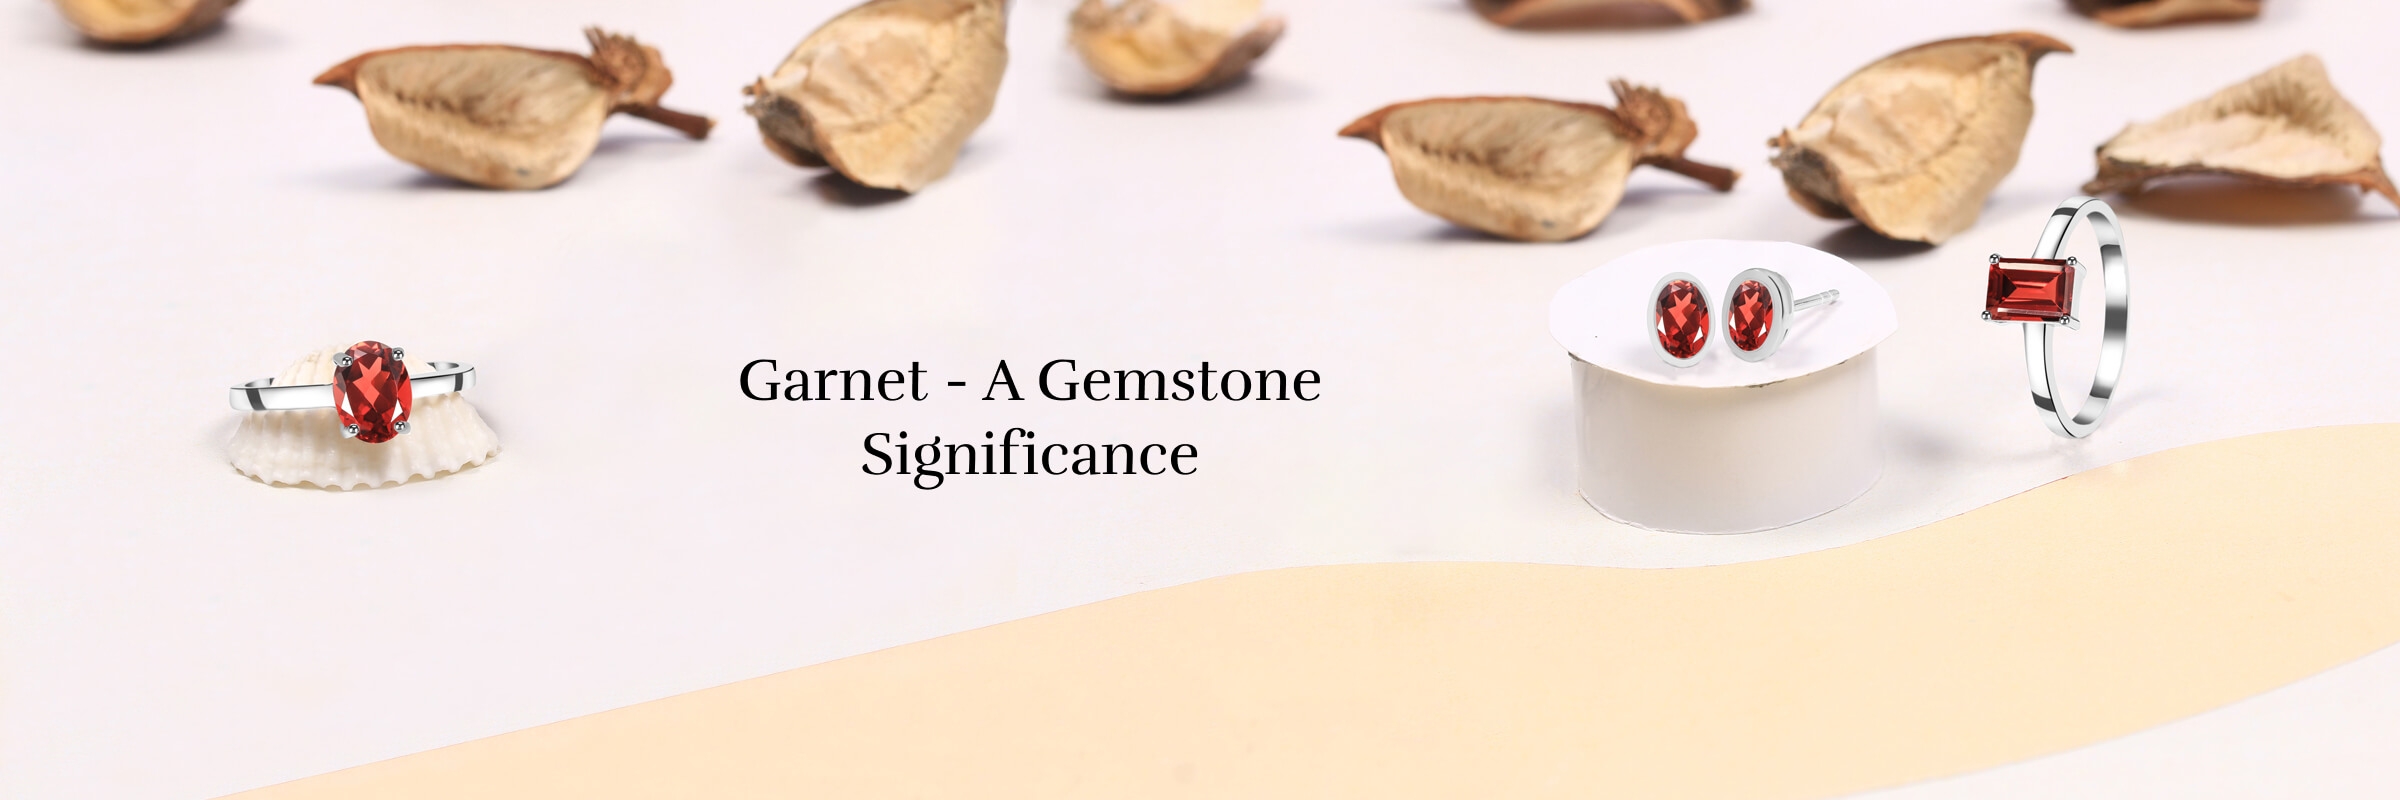 Garnet Significance